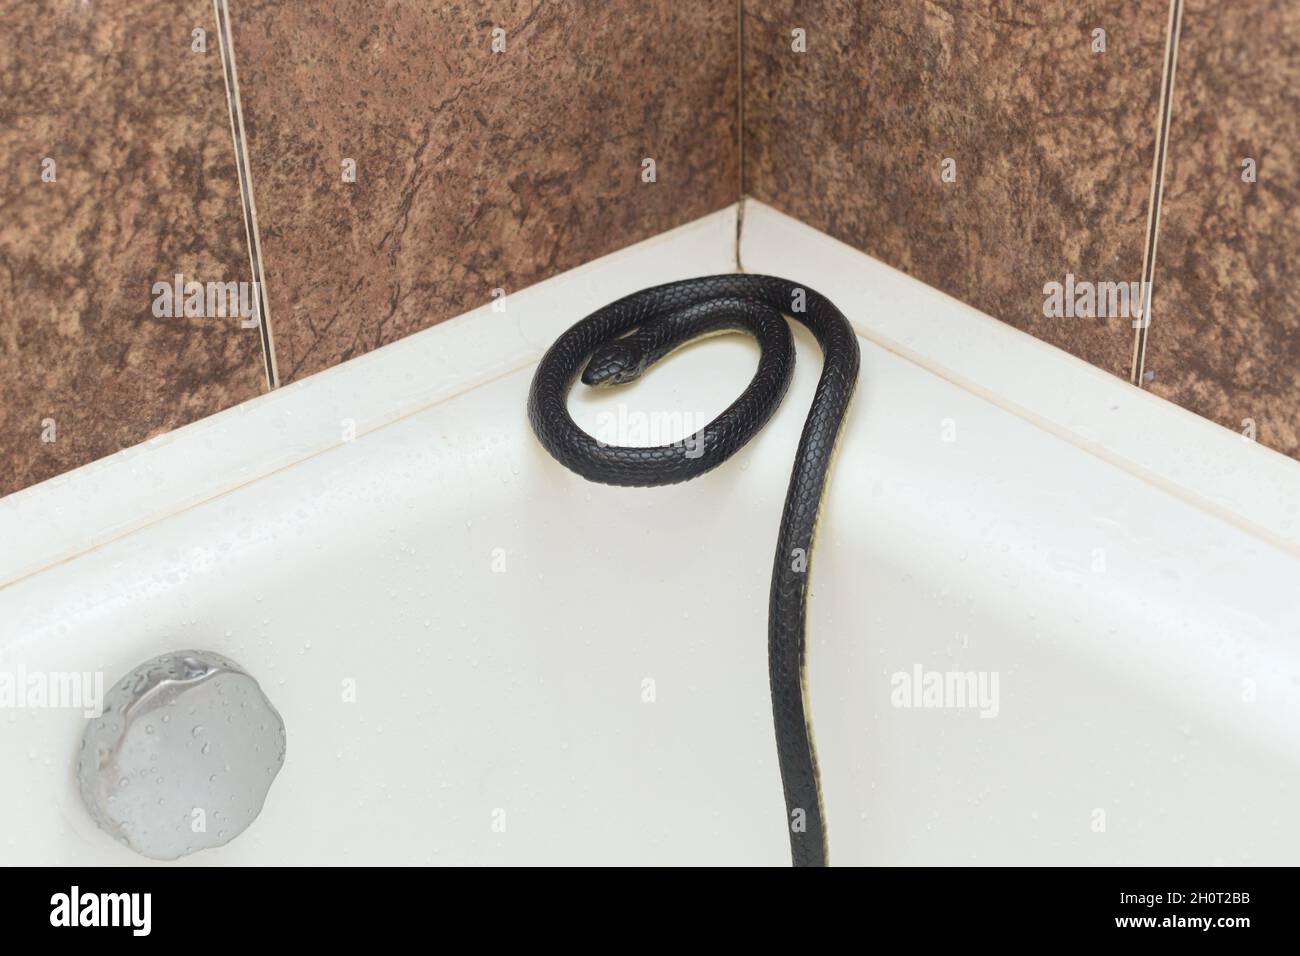 https://c8.alamy.com/comp/2H0T2BB/black-venomous-snake-on-the-edge-of-a-white-bathtub-in-an-apartment-2H0T2BB.jpg